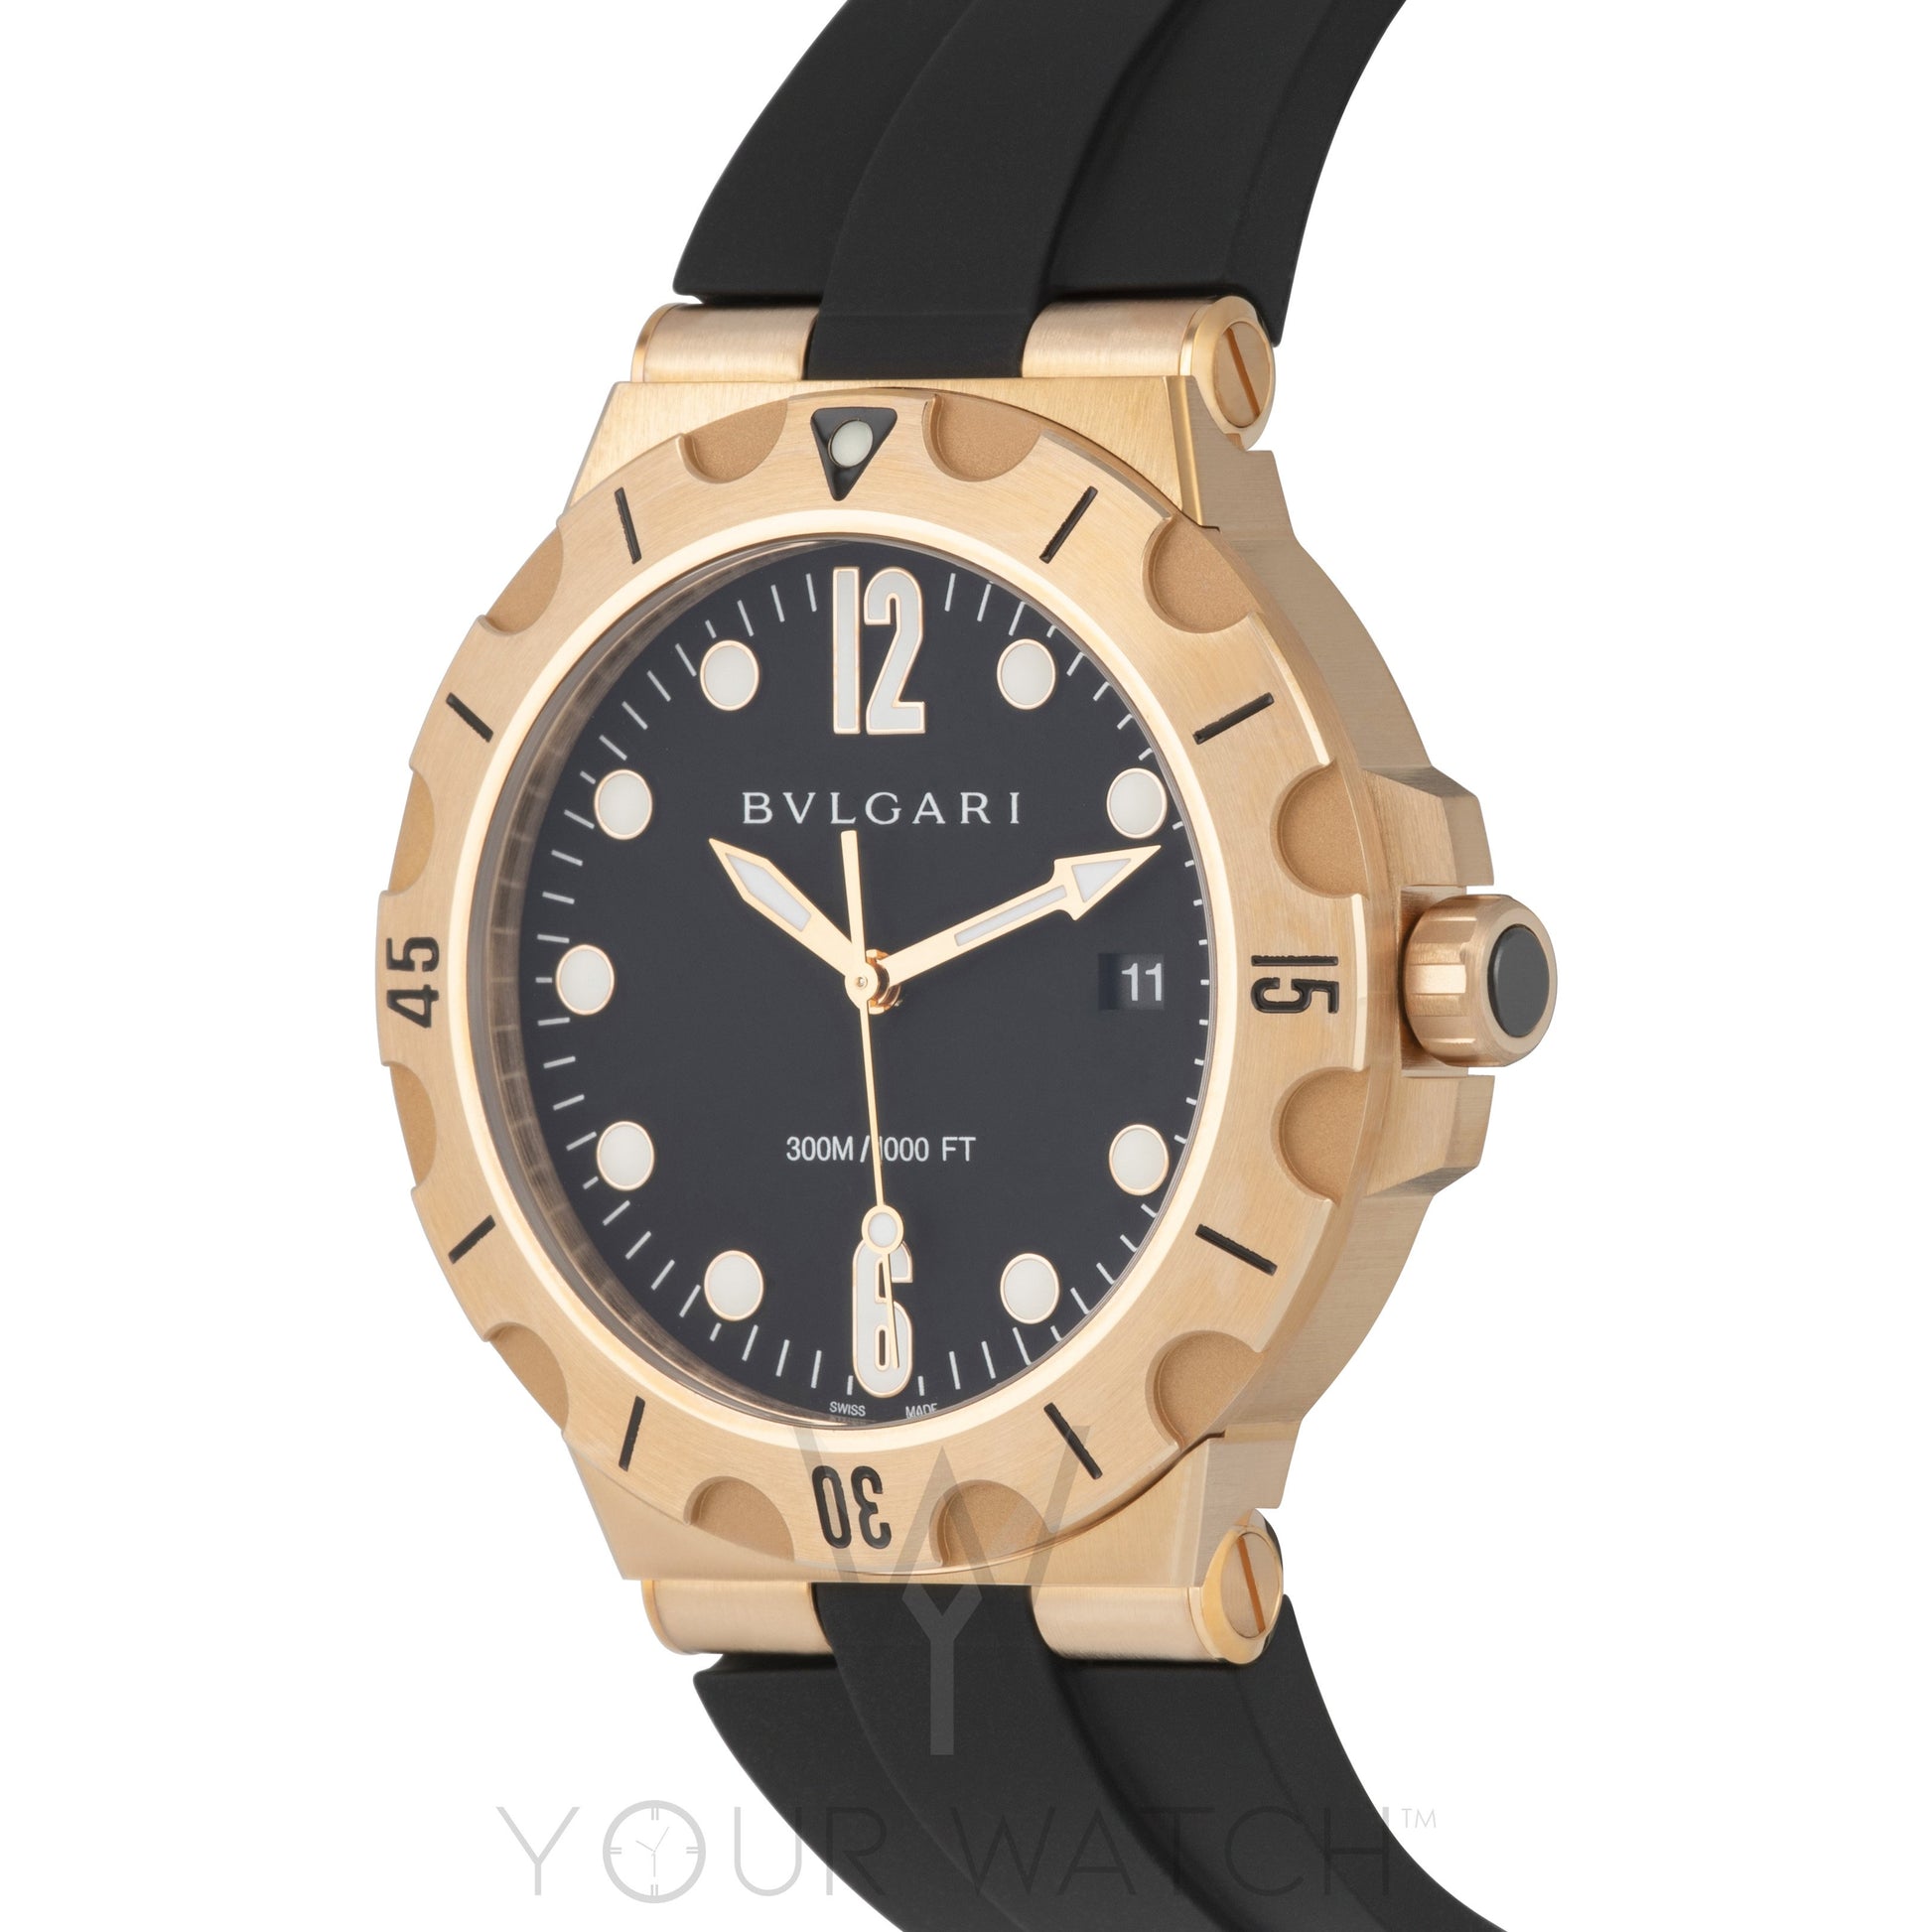 Bvlgari Diagono Professional Automatic Men's Watch 102326